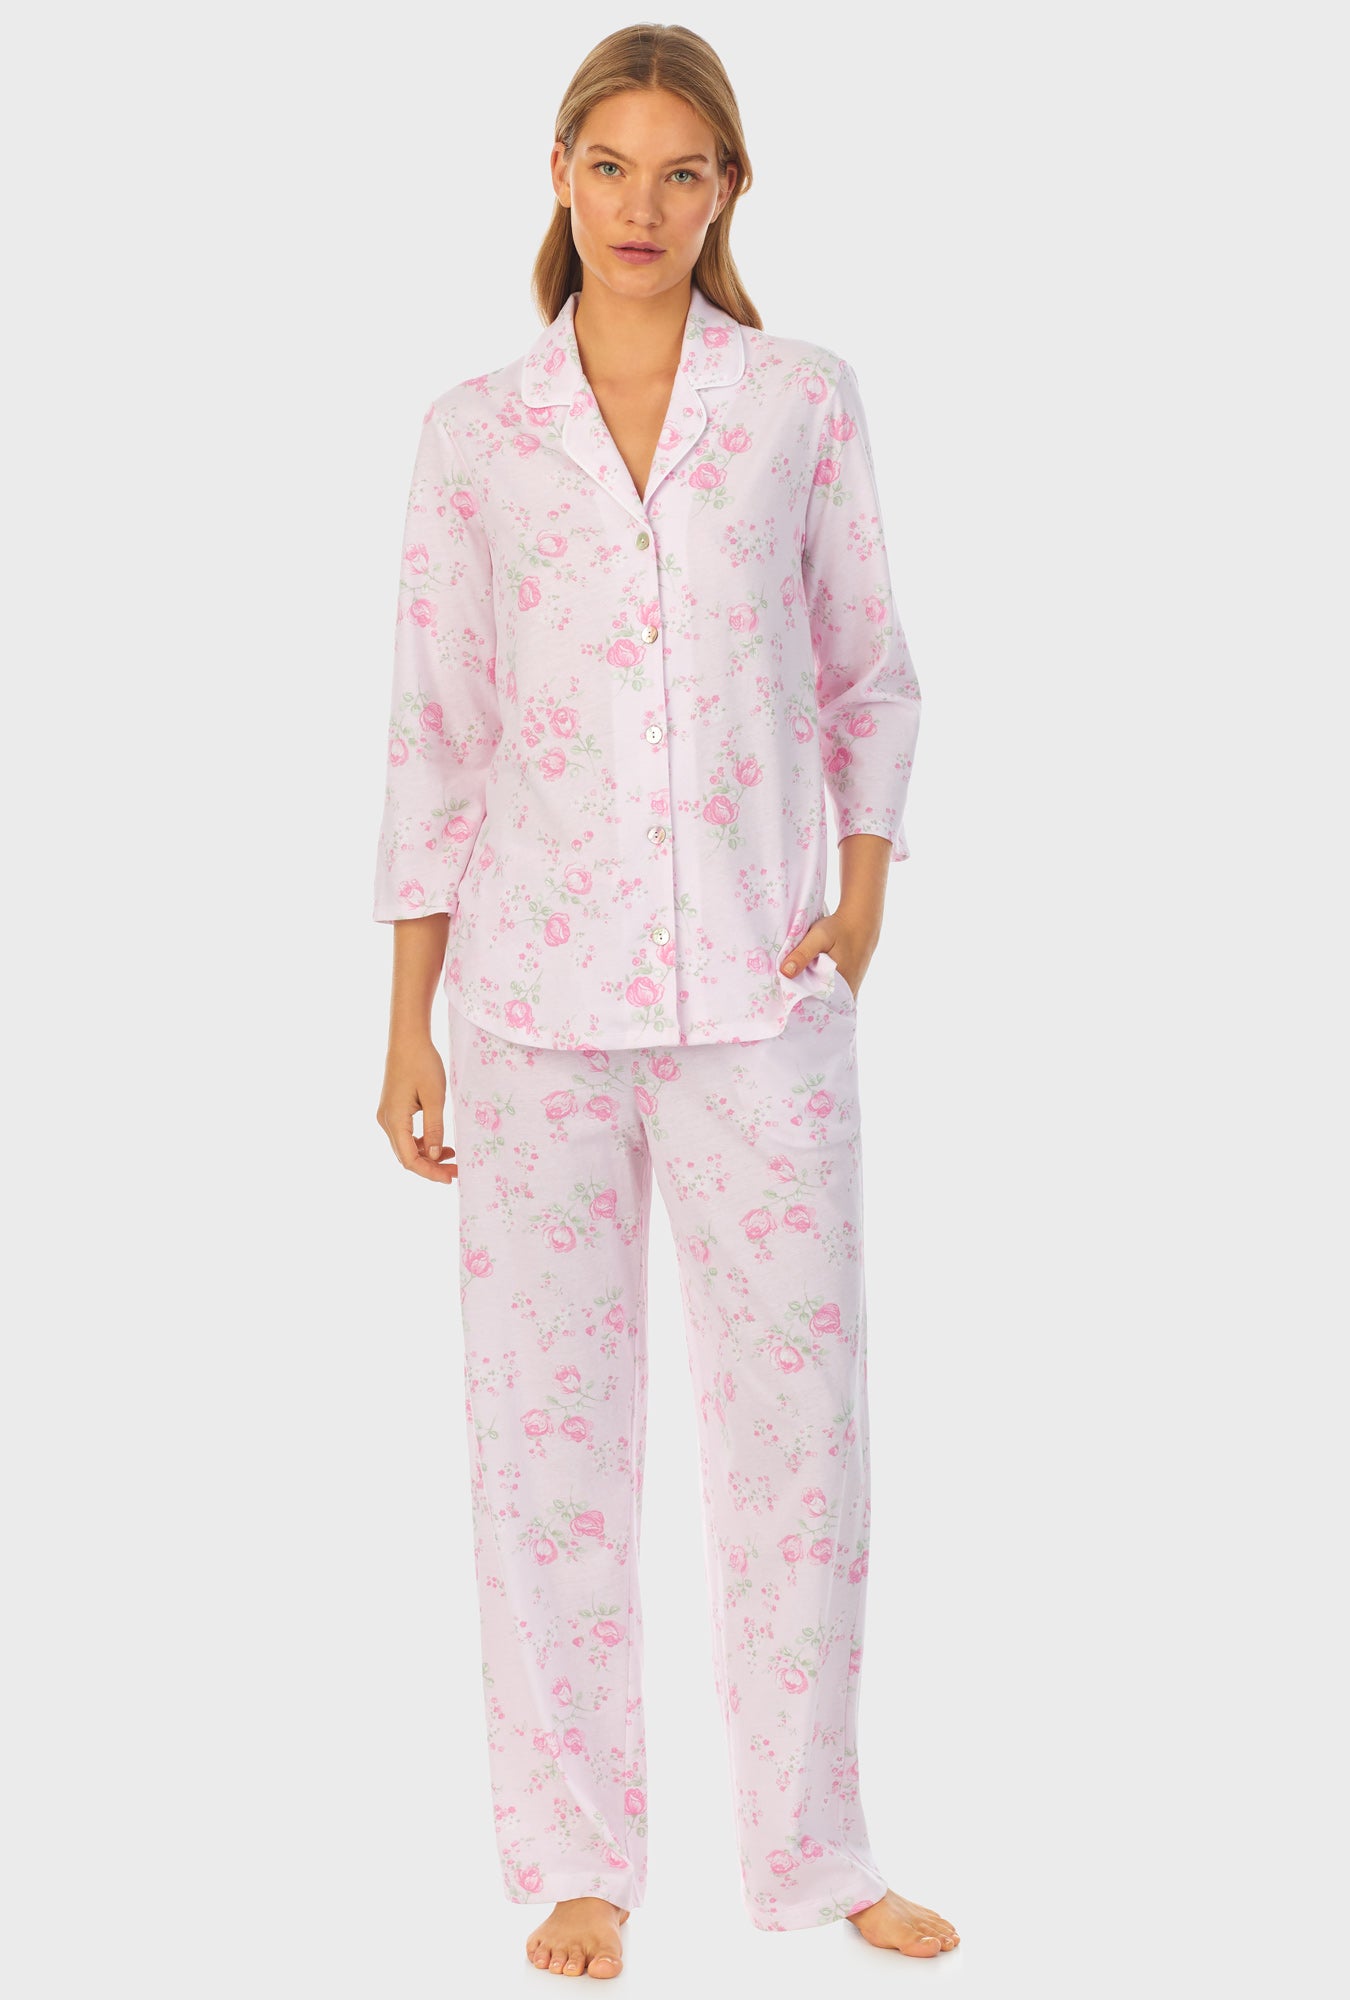 A lady wearing pink long sleeve cotton long pajama set with sweet rose print.